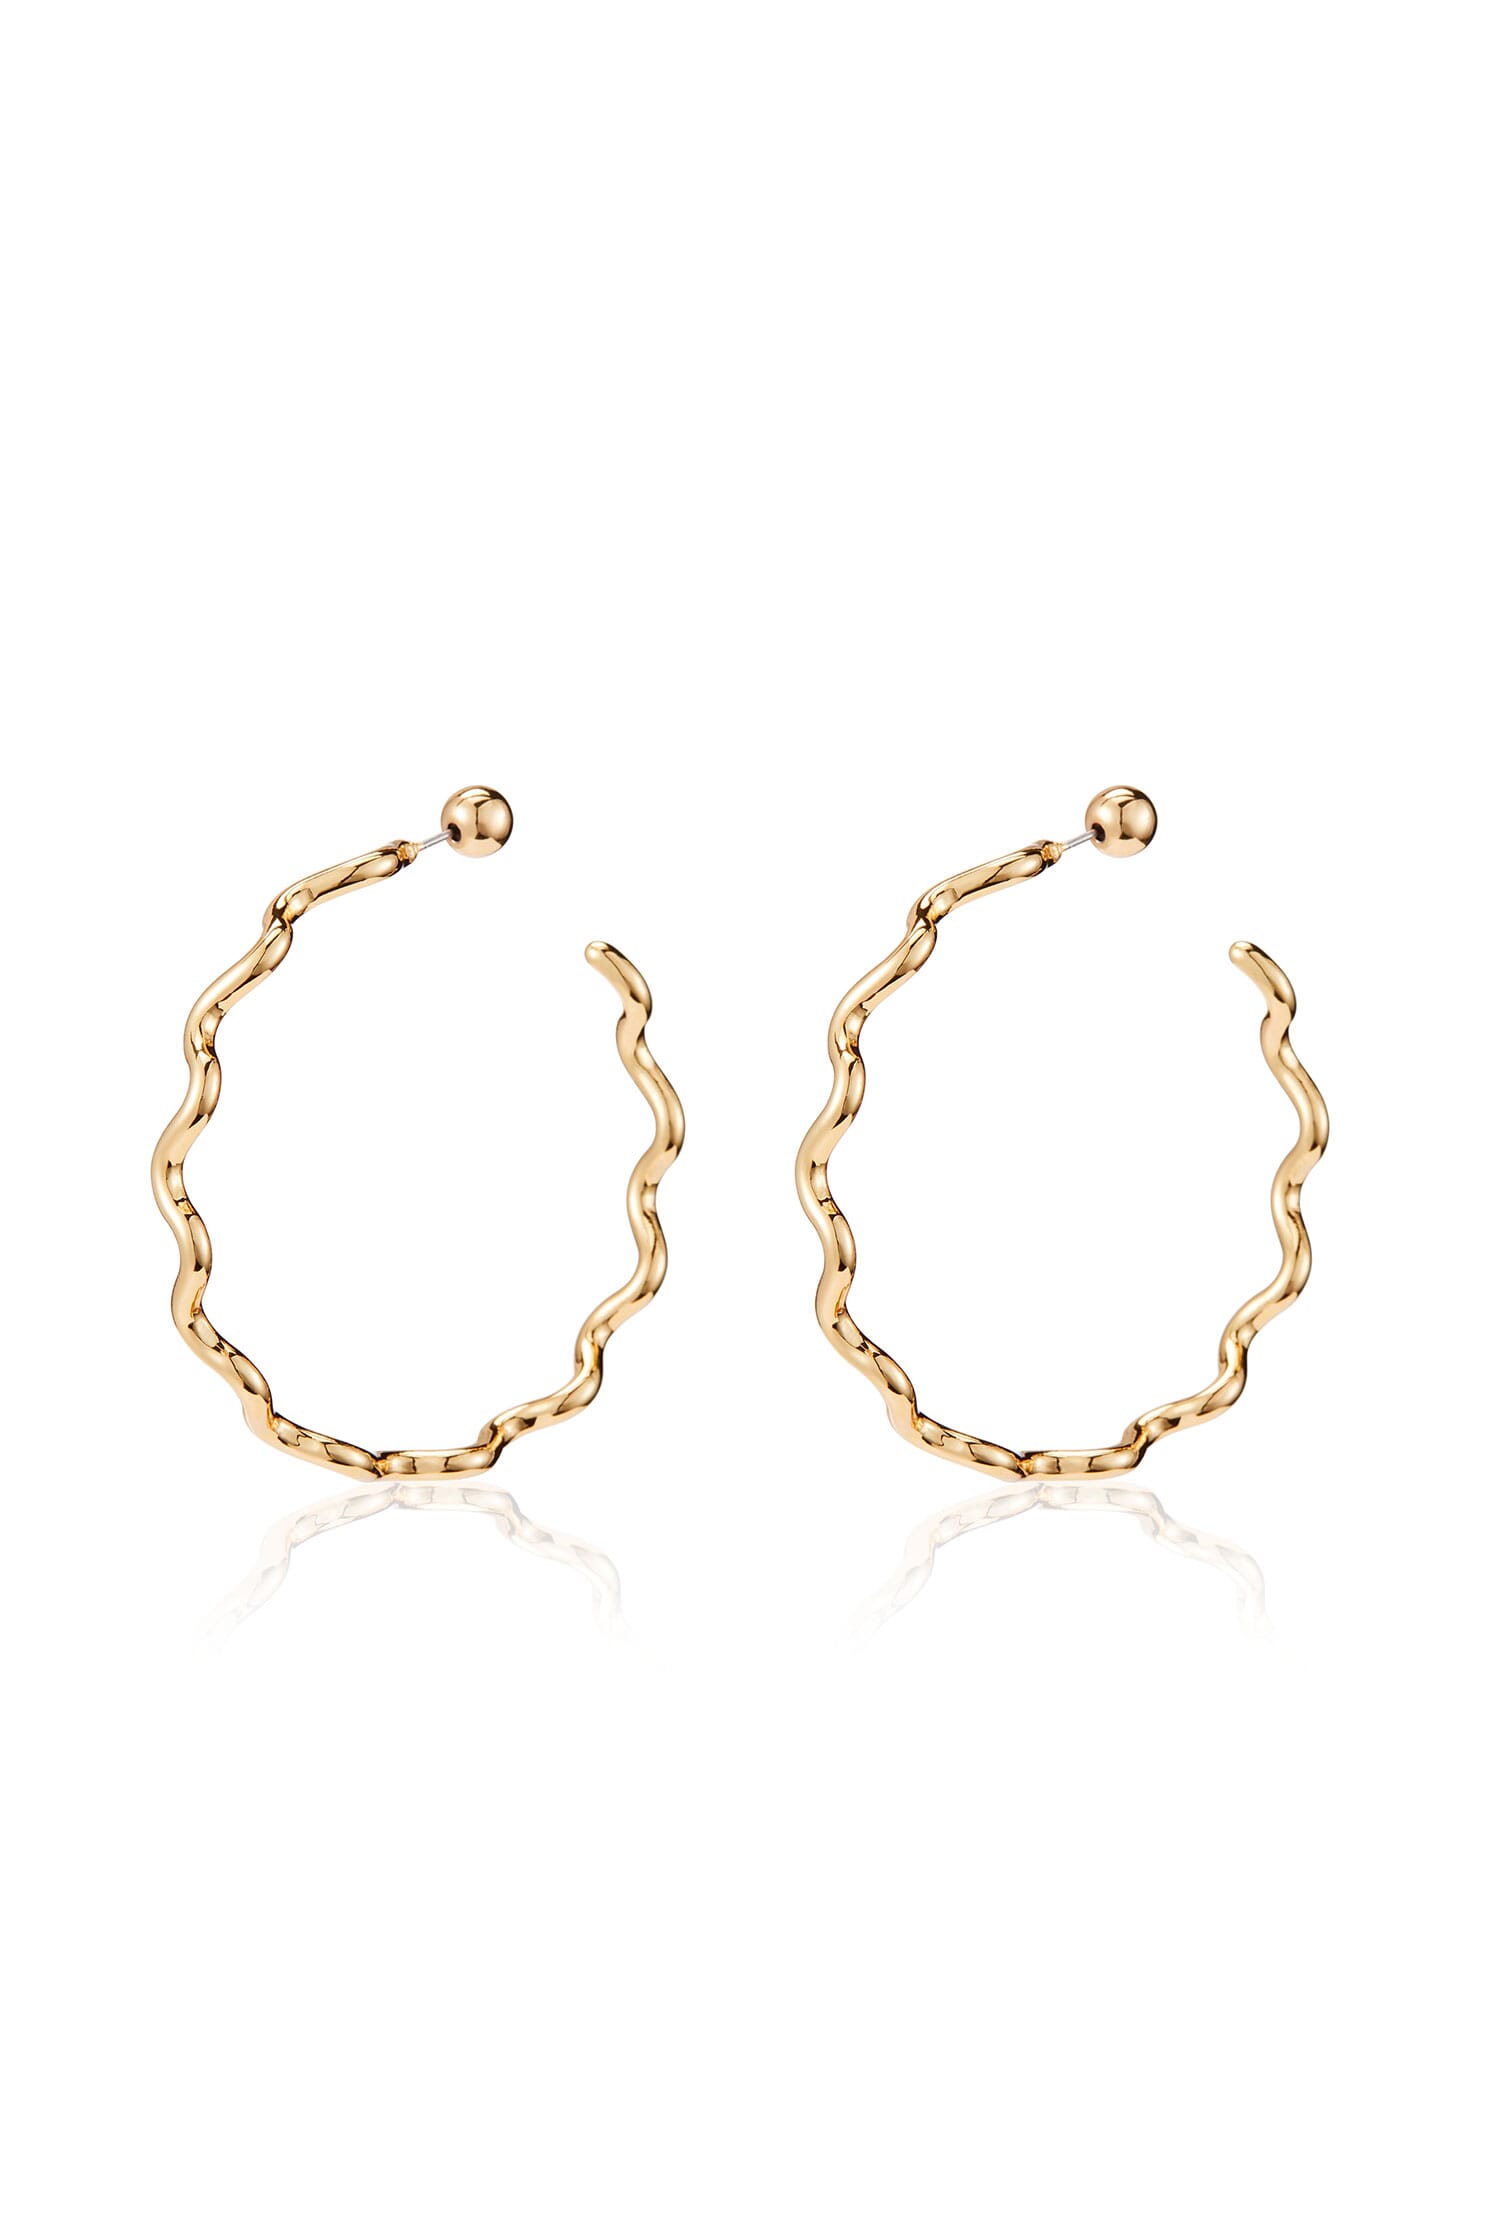 JENNY BIRD | Squiggle Hoop Earrings in Gold | FashionPass